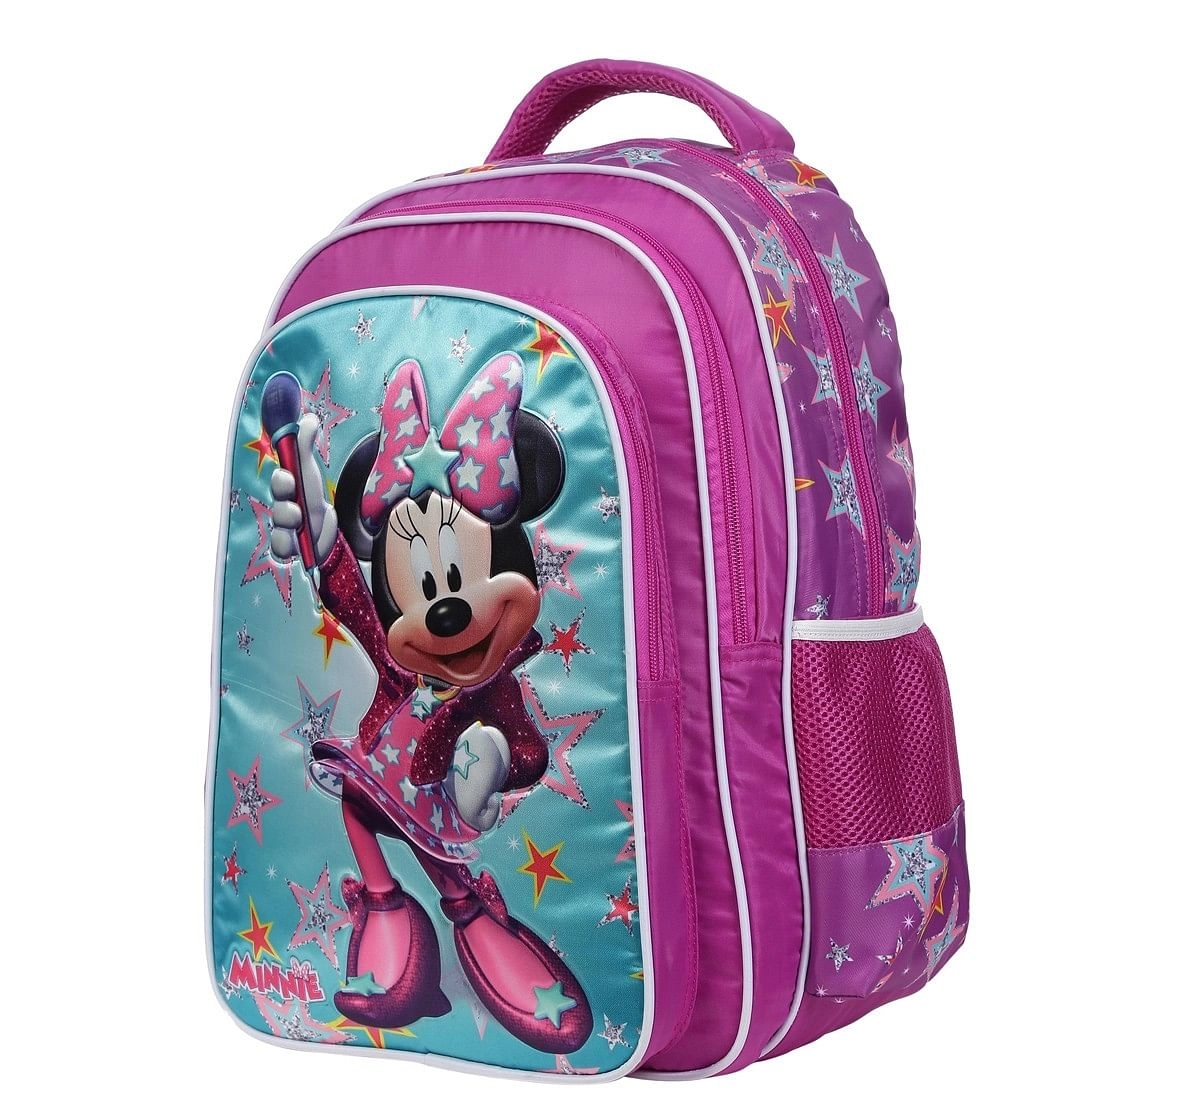 Simba Minnie Rock 16 Backpack Multicolor 3Y+